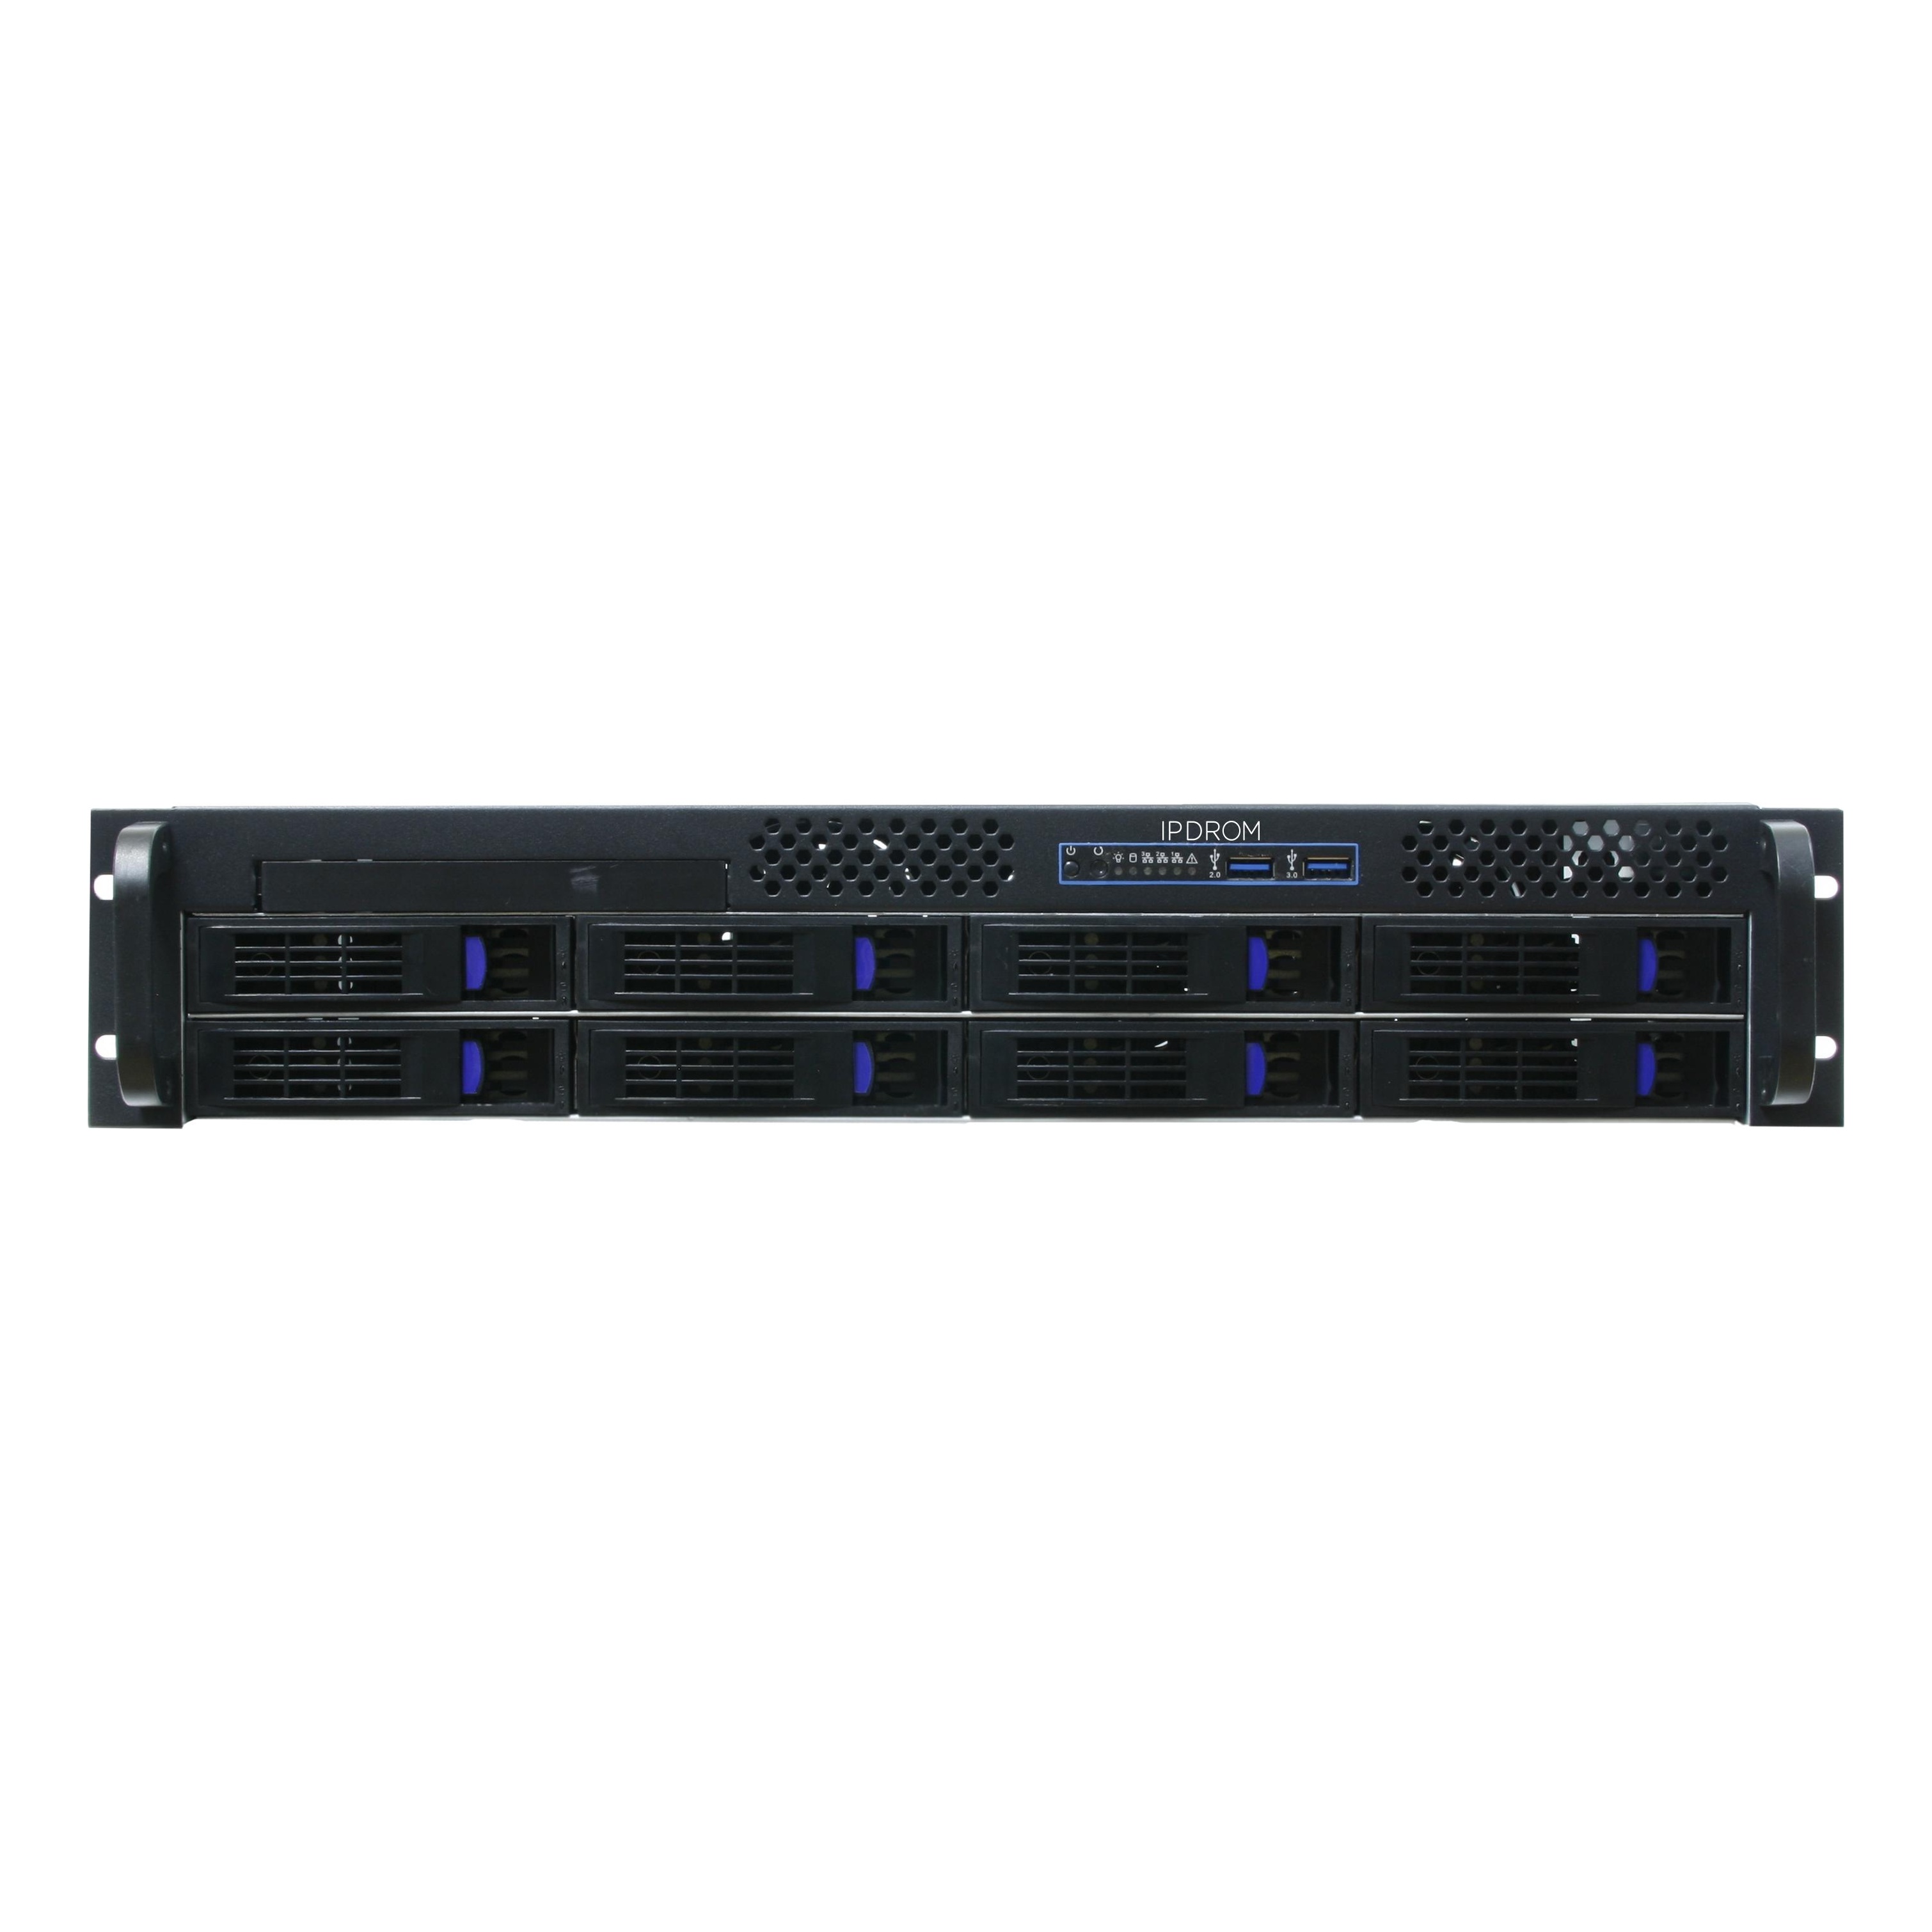 Сервер IPDROM Enterprise (E-8-РД-С2-8/Р1-2Э)